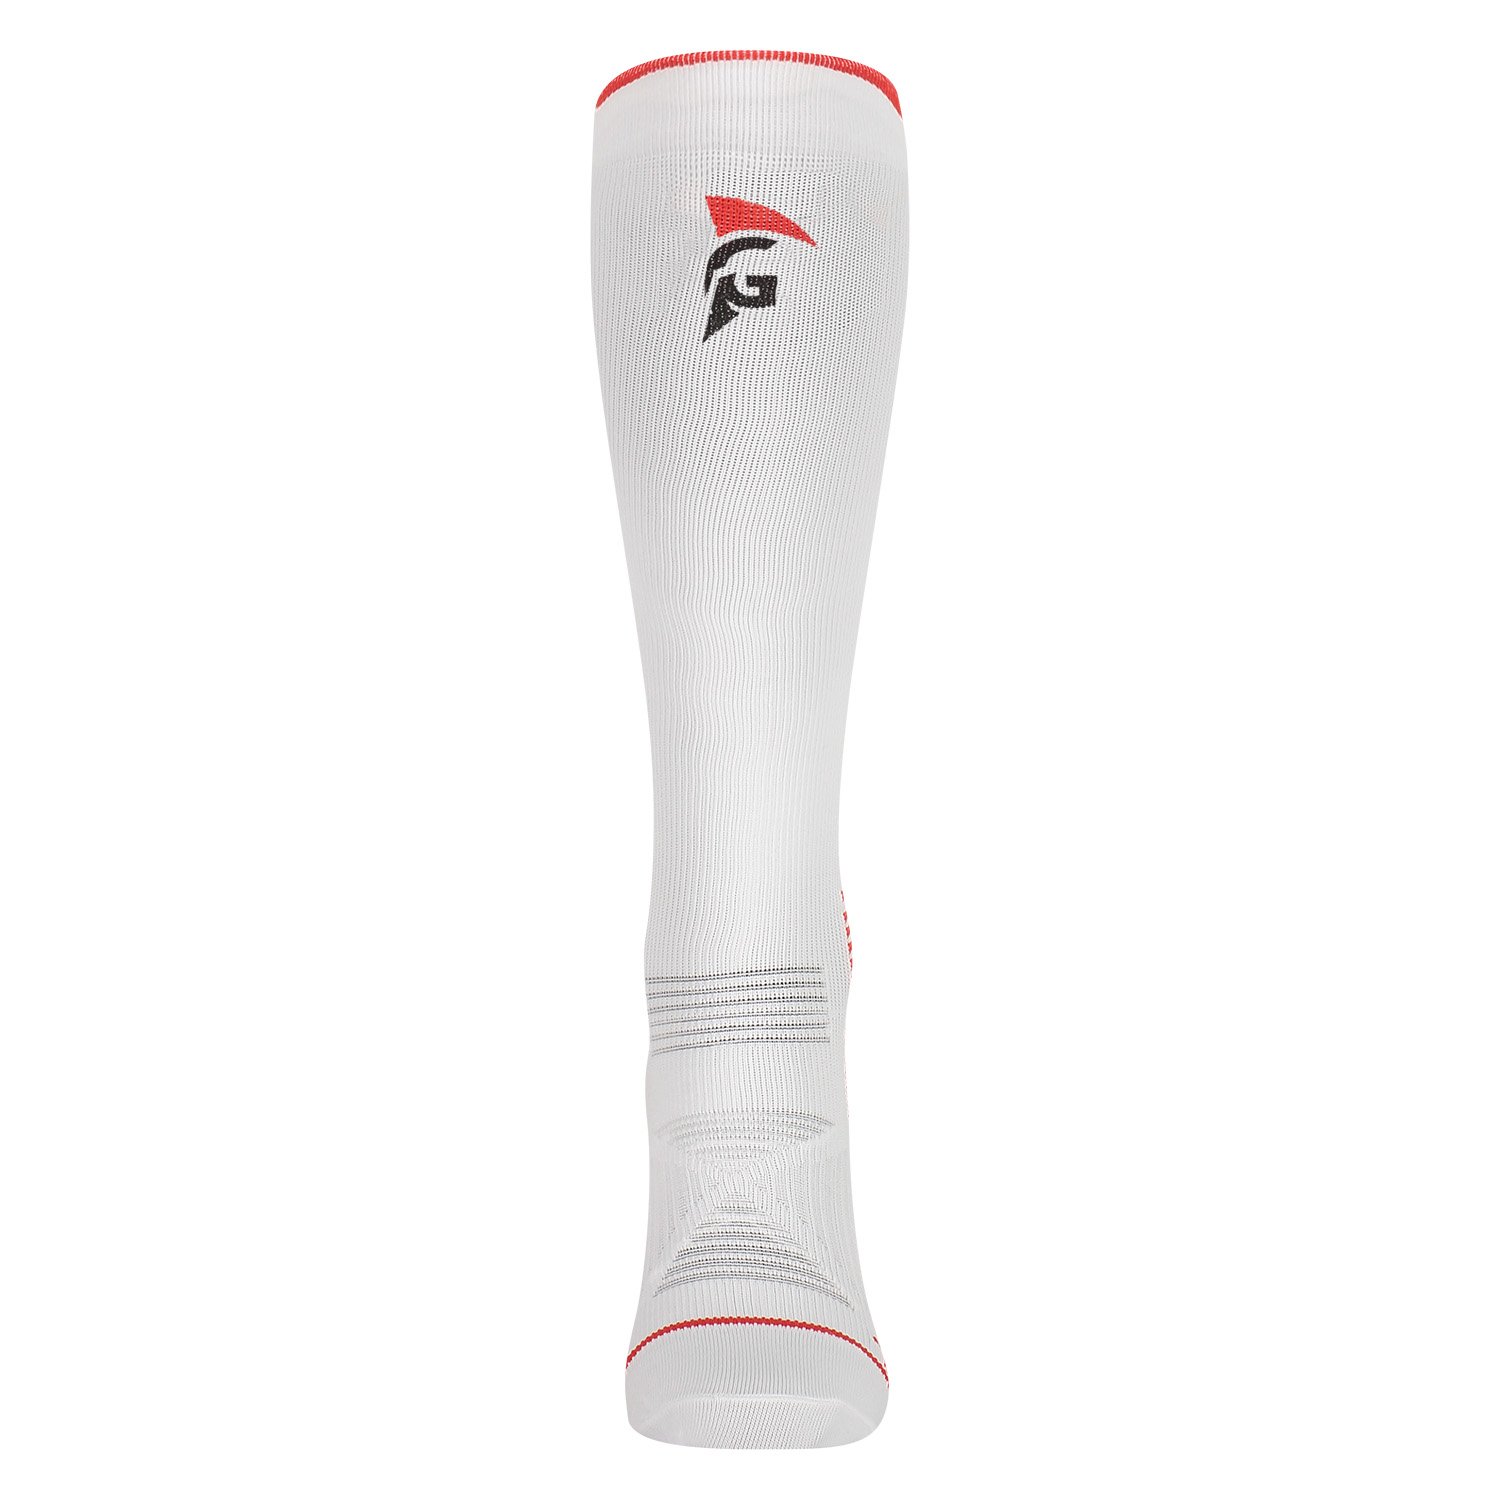 gladiator sports running stockings product explanation